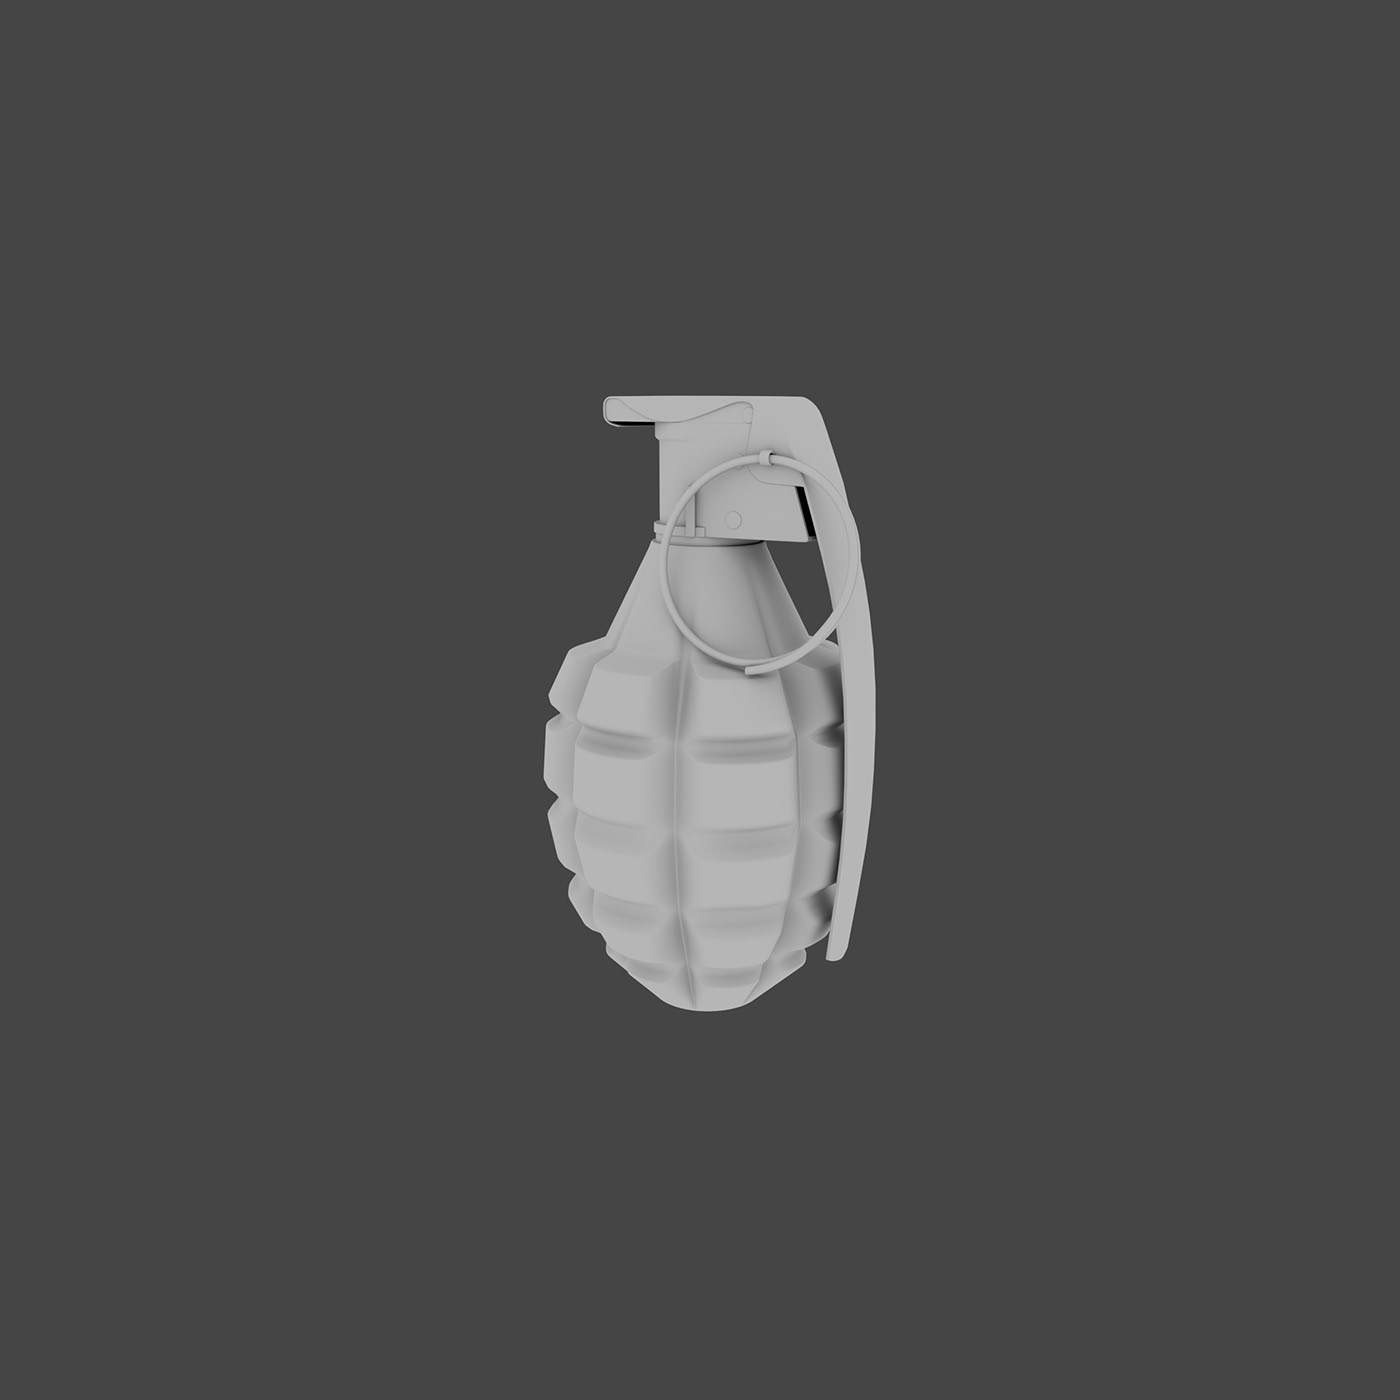 game 3D Maya Substance Painter texturing 3d modeling grenade Weapon Sword